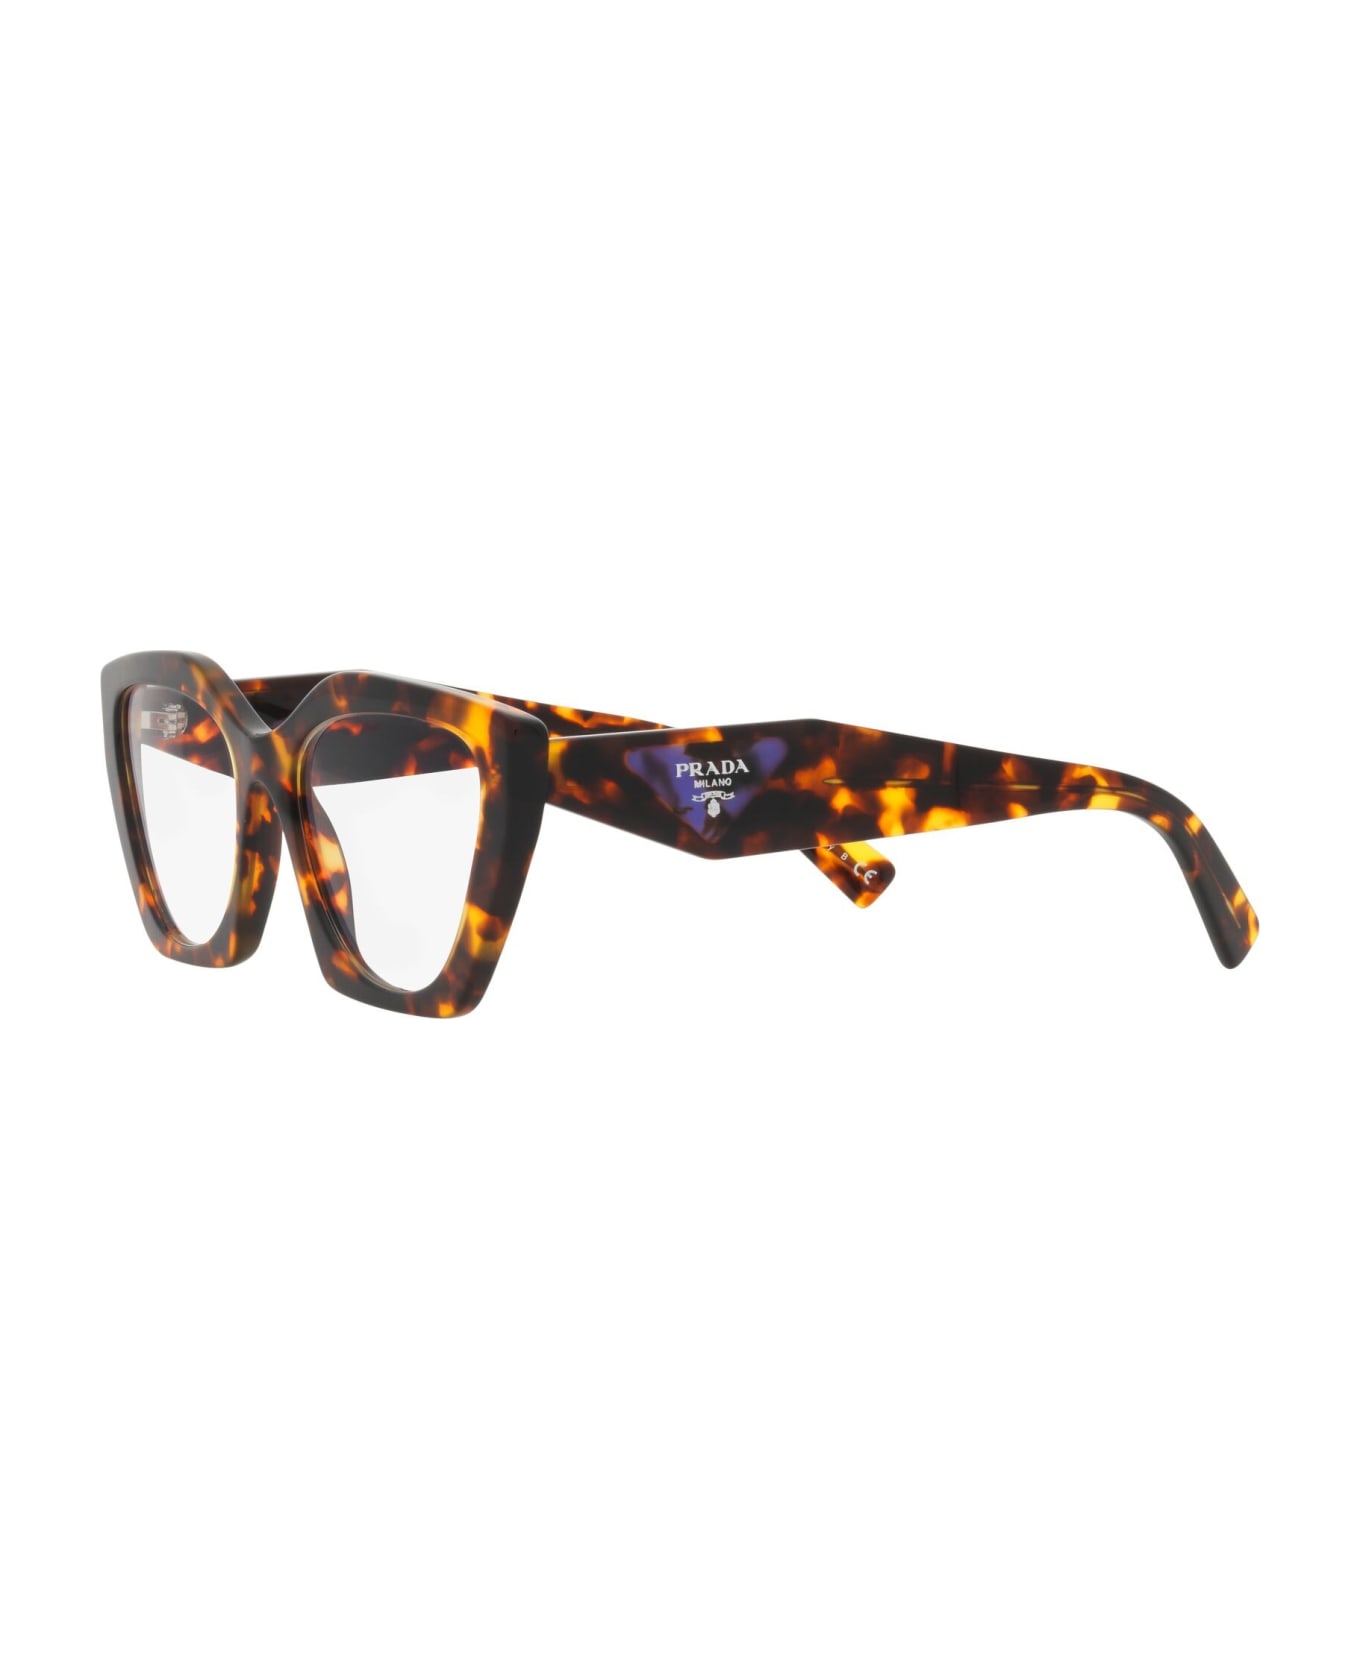 Prada Eyewear Glasses - Marrone